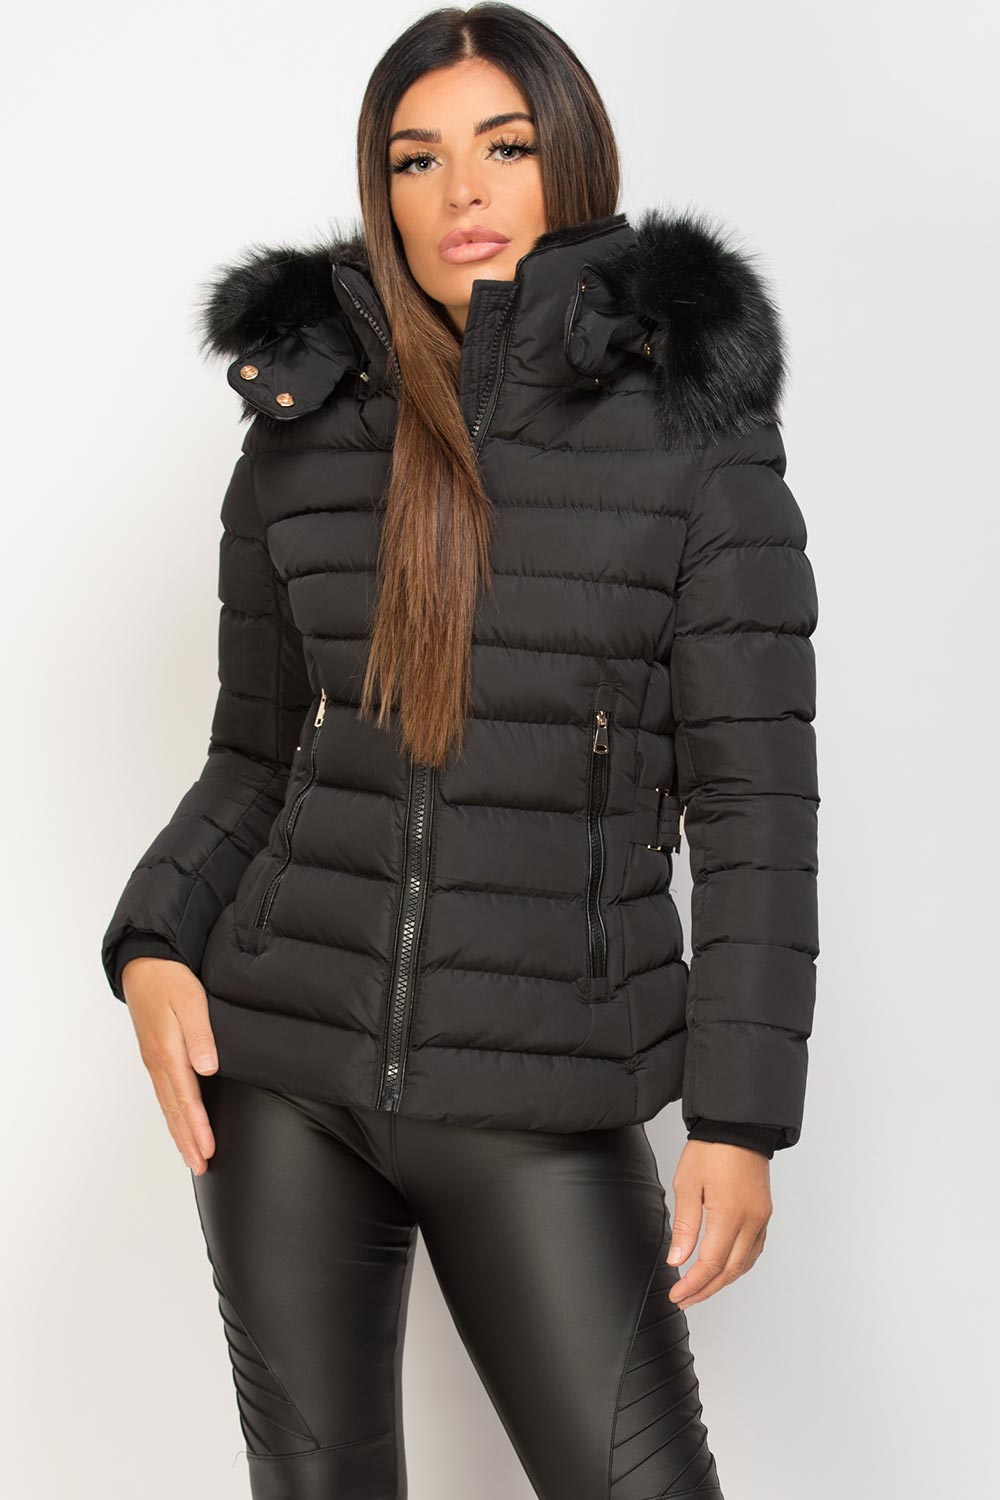 Womens Black Puffer Jacket With Faux Fur Hood Winter Coat – Styledup.co.uk